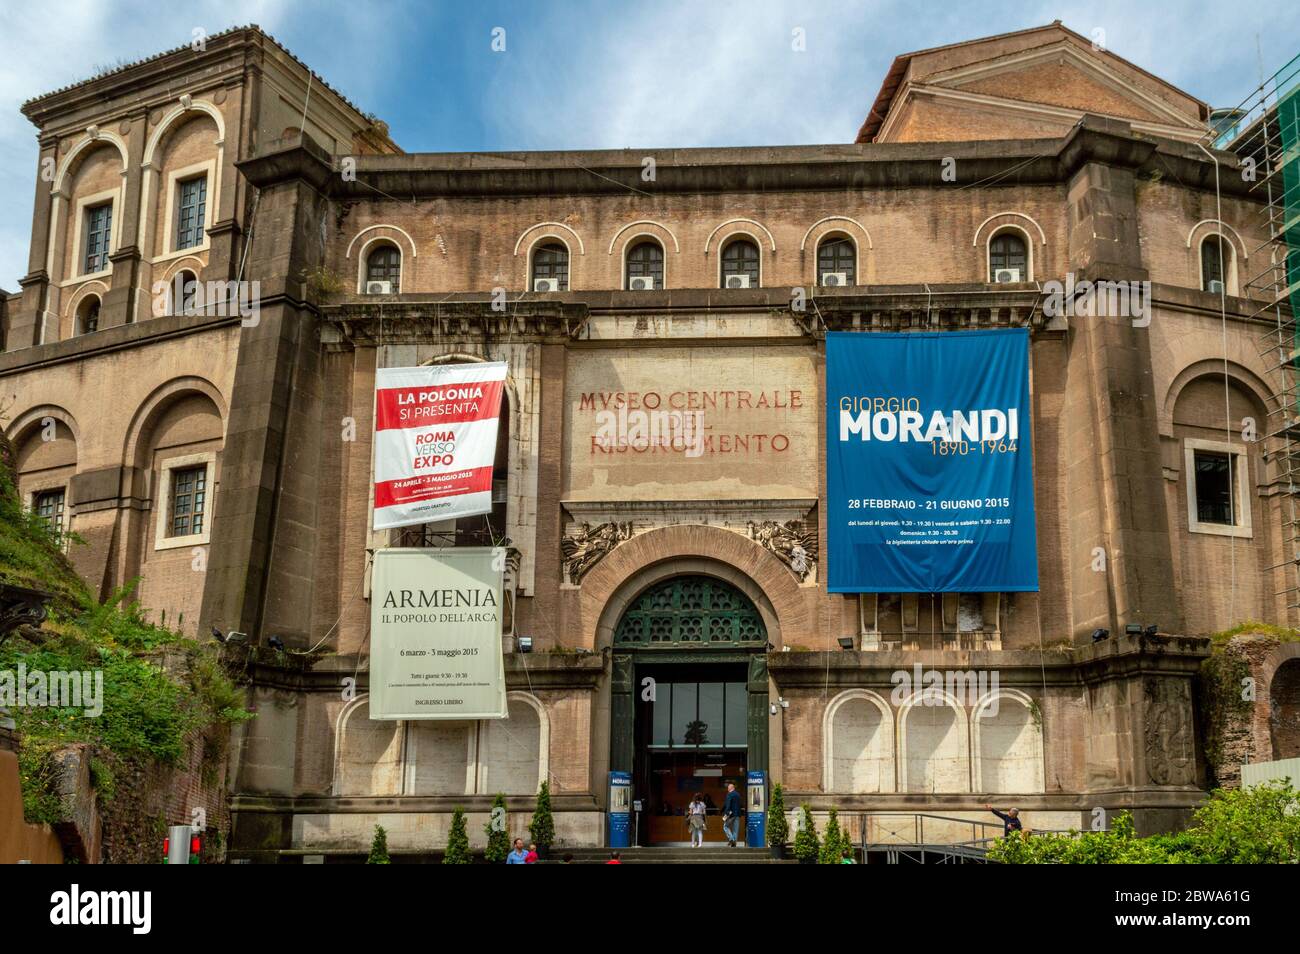 Rome / Italy - May 3, 2015: The Central Museum of Risorgimento (Museo Centrale del Risorgimento), historical museum in Rome dedicated to the unificati Stock Photo